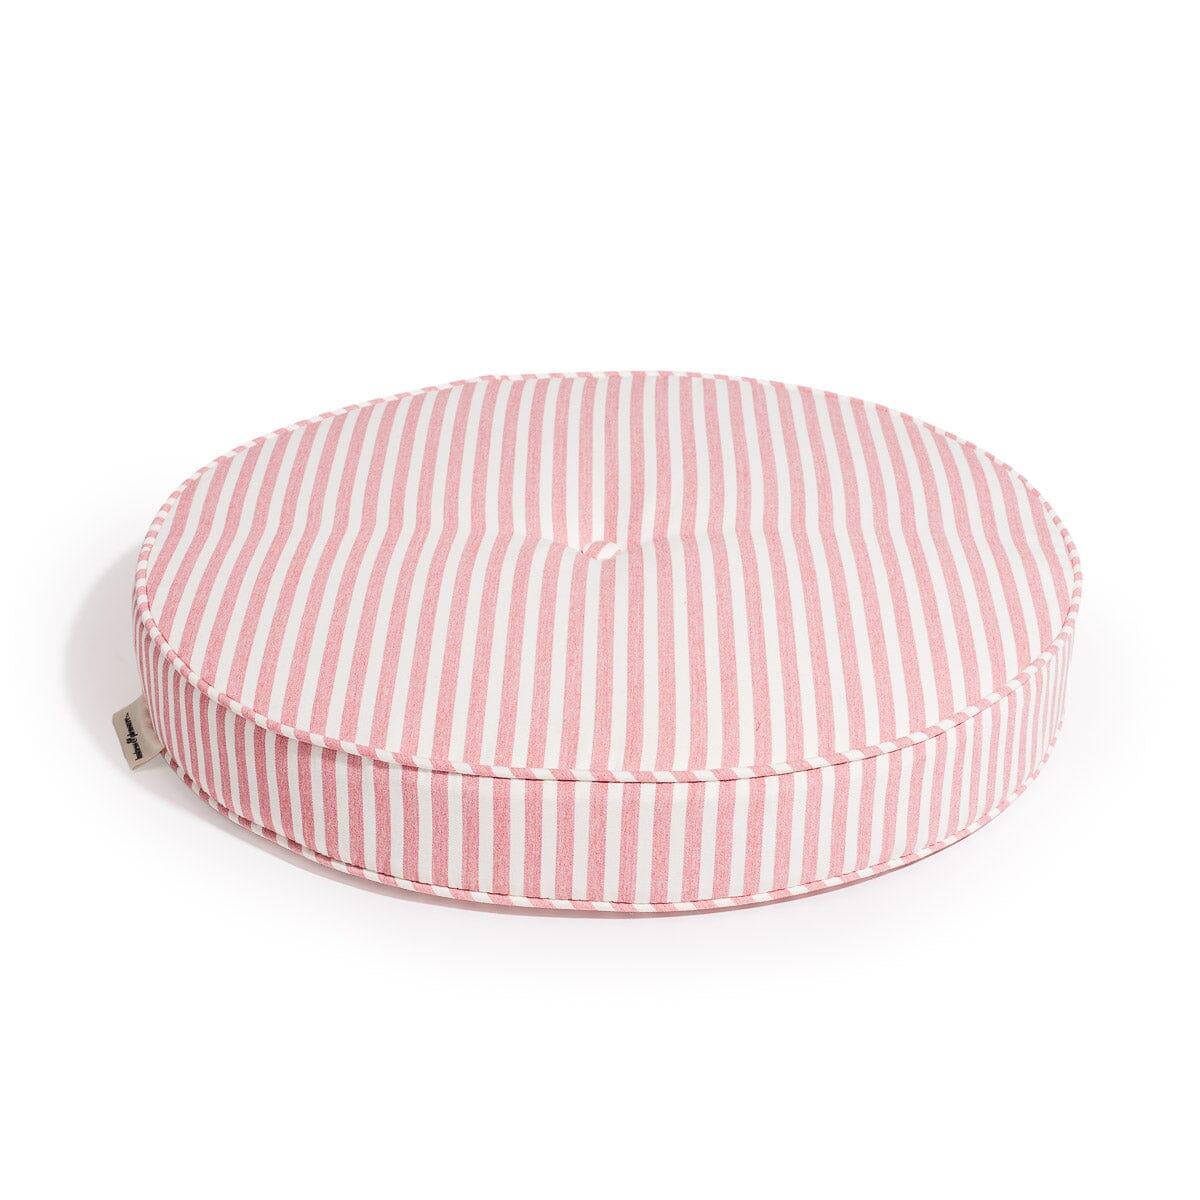 The Circular Pillow - Laurens Pink Stripe Circular Pillow Business & Pleasure Co 